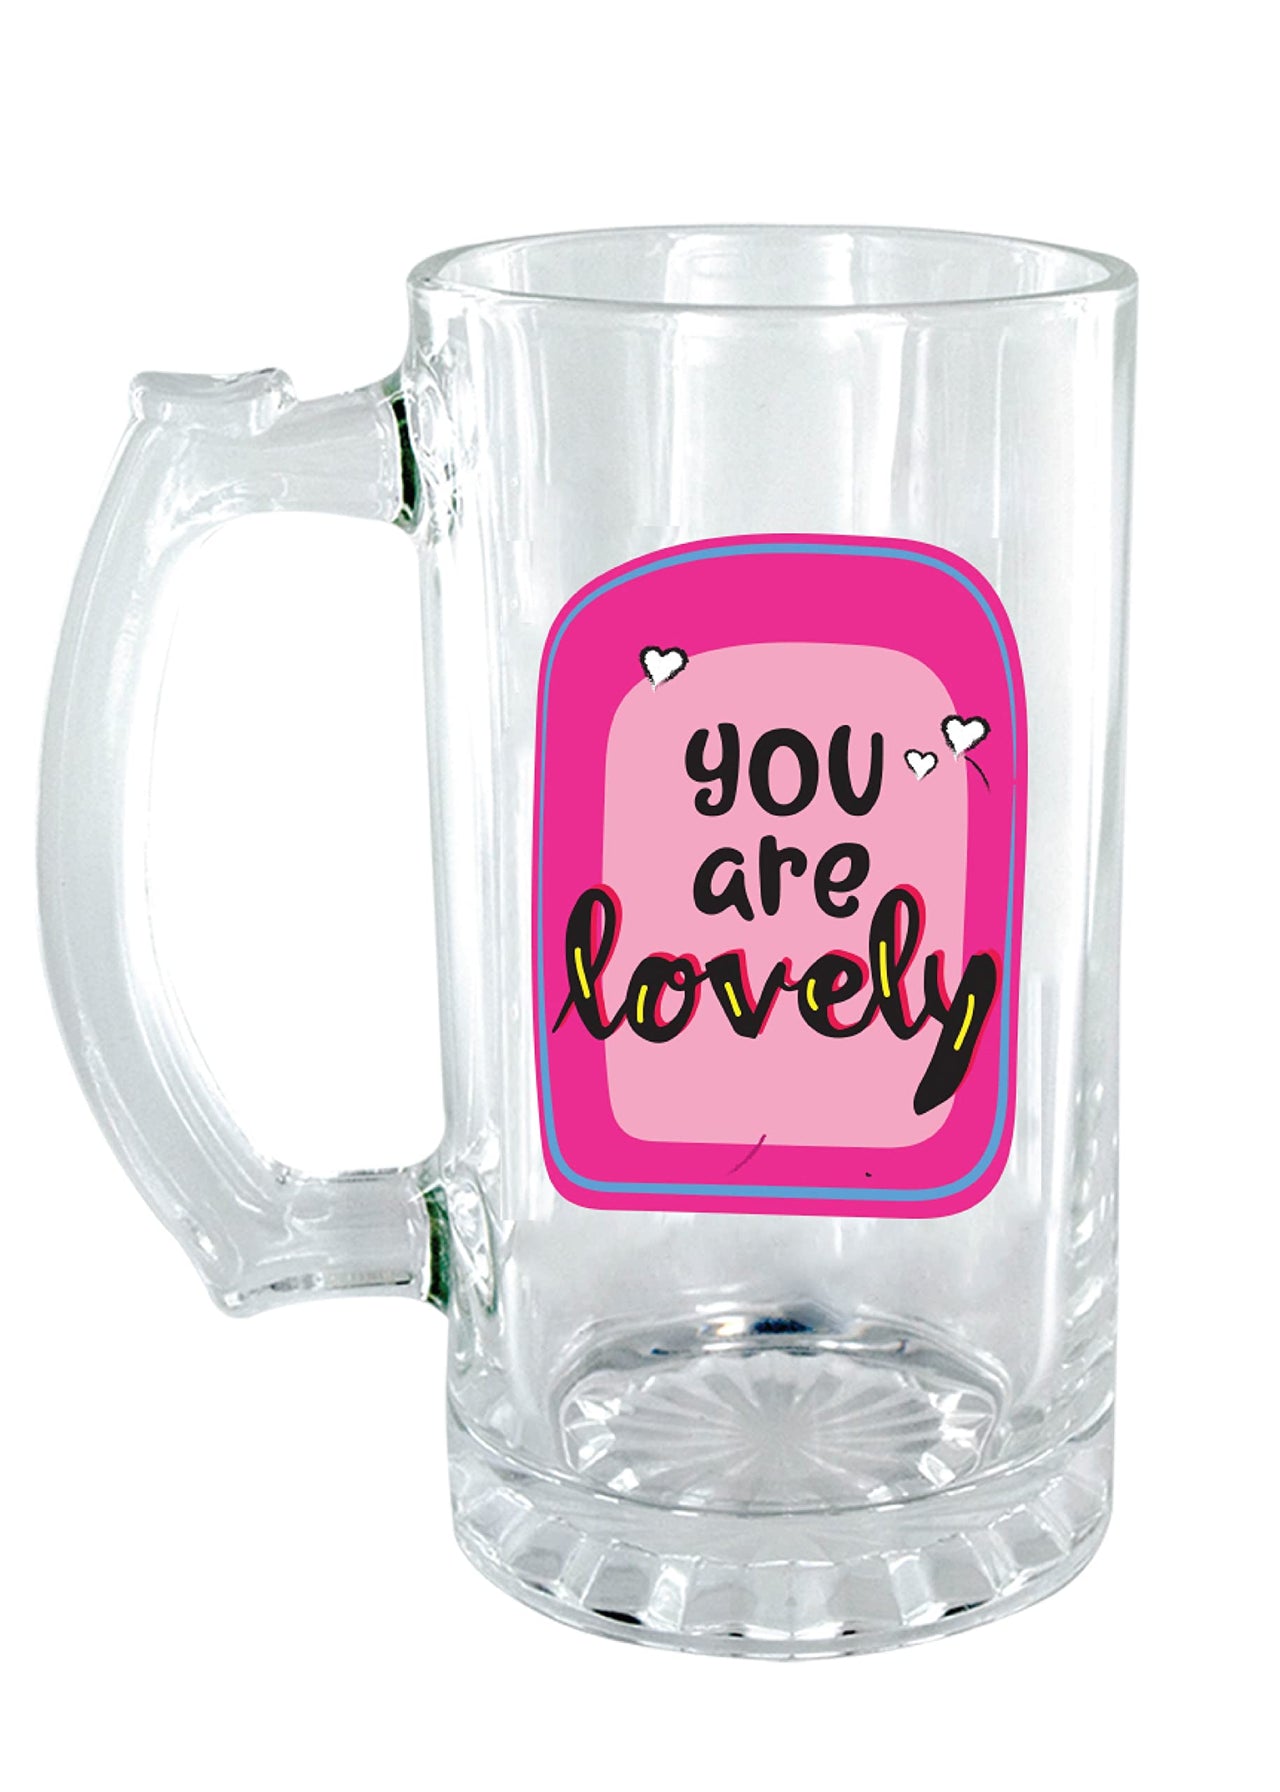 You're Lovely Beer Mug 1 Piece, Clear, 500 ml - Transparent Glass Beer Mug - Printed Beer Mug with Handle